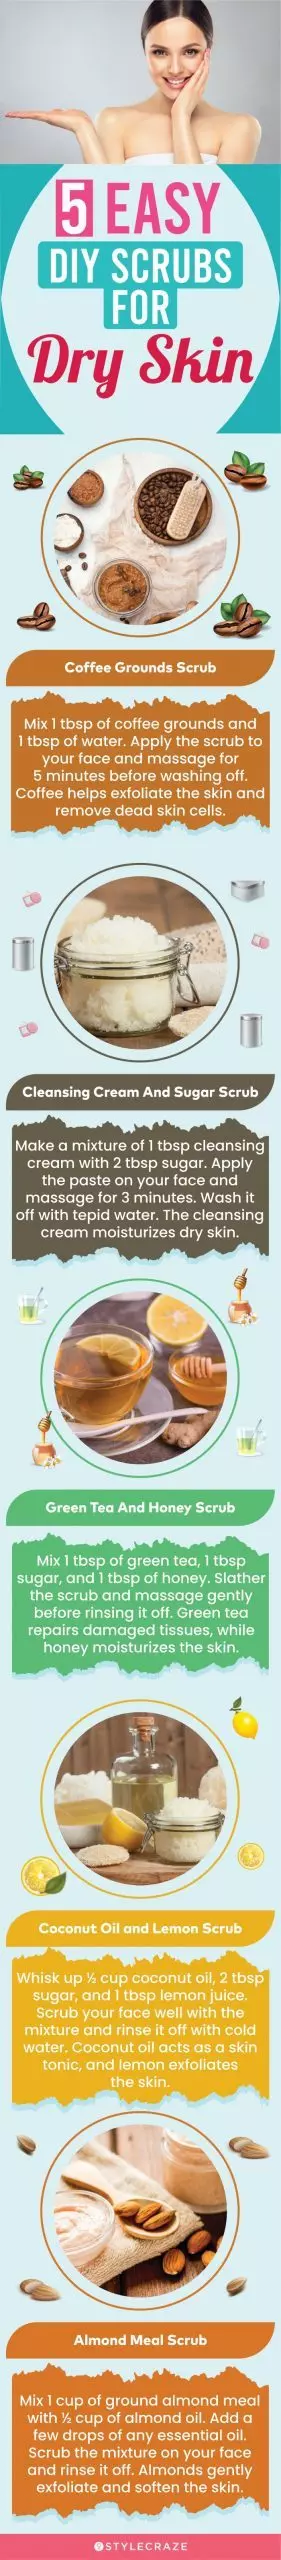 5 easy diy scrubs for dry skin (infographic)